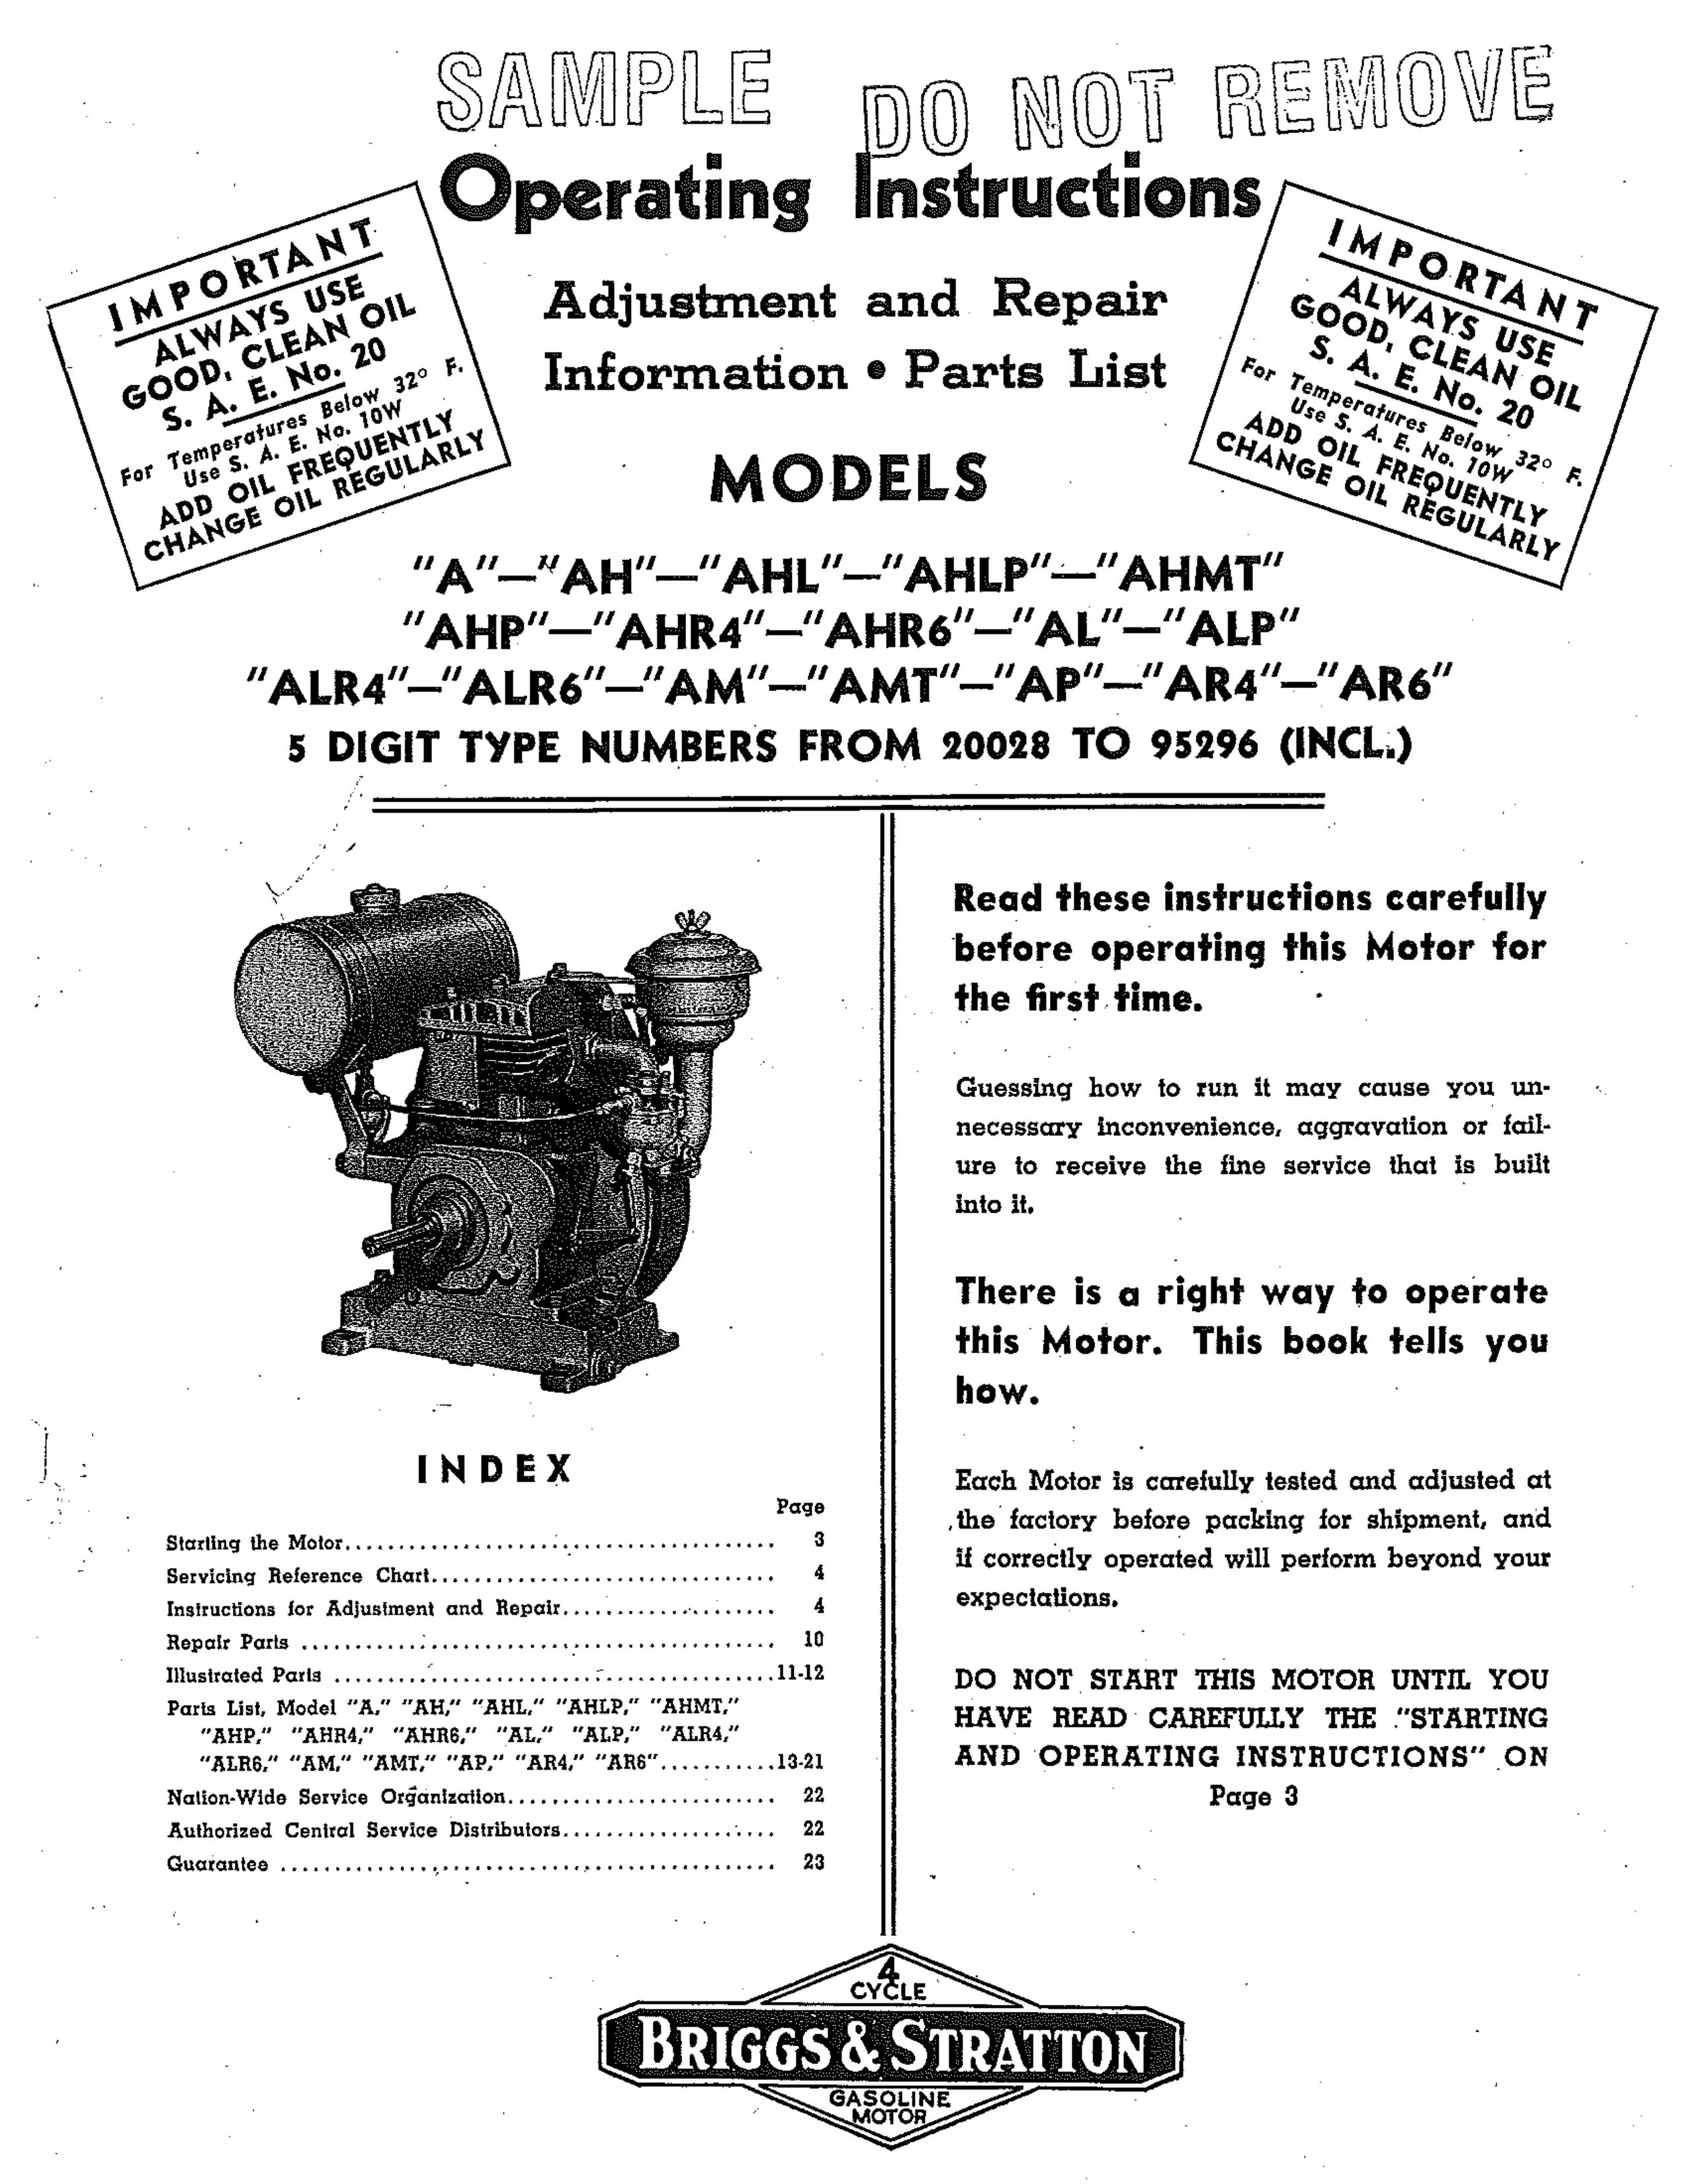 Briggs & Stratton ALR4 Outboard Motor User Manual